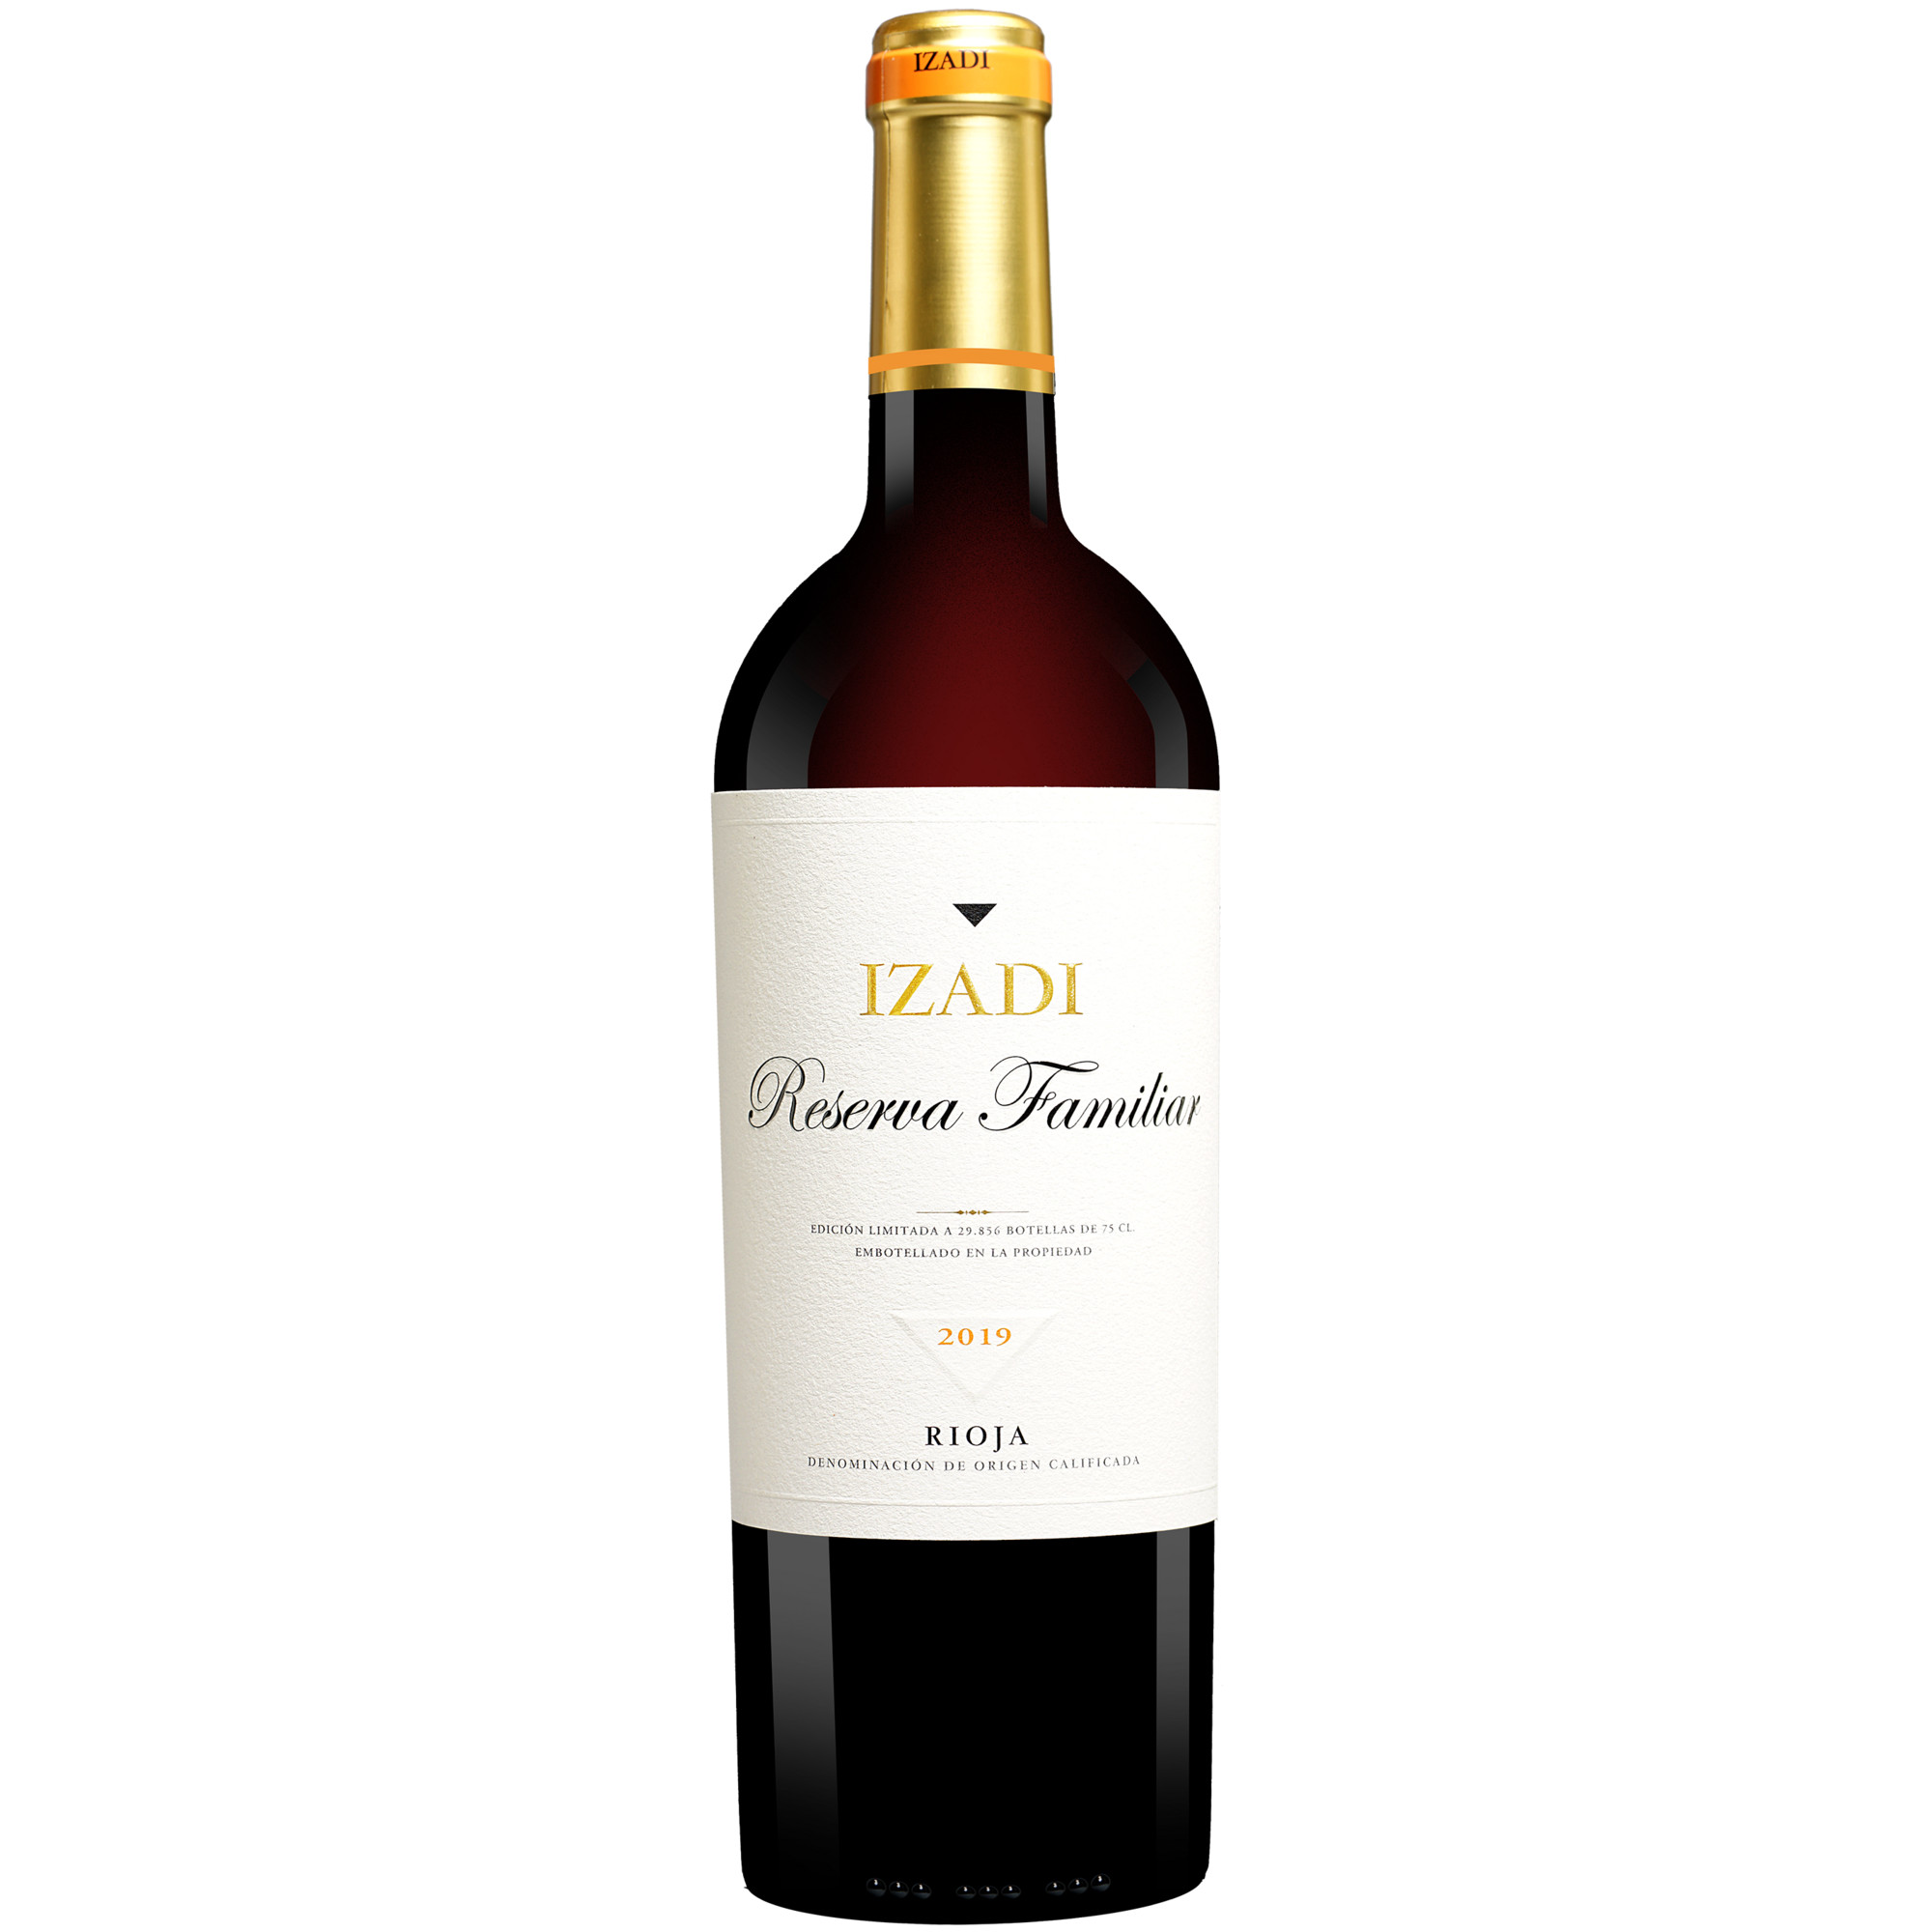 Izadi Tinto »Reserva Familiar« Reserva 2019  0.75L 14.5% Vol. Rotwein Trocken aus Spanien Rotwein 36028 vinos DE